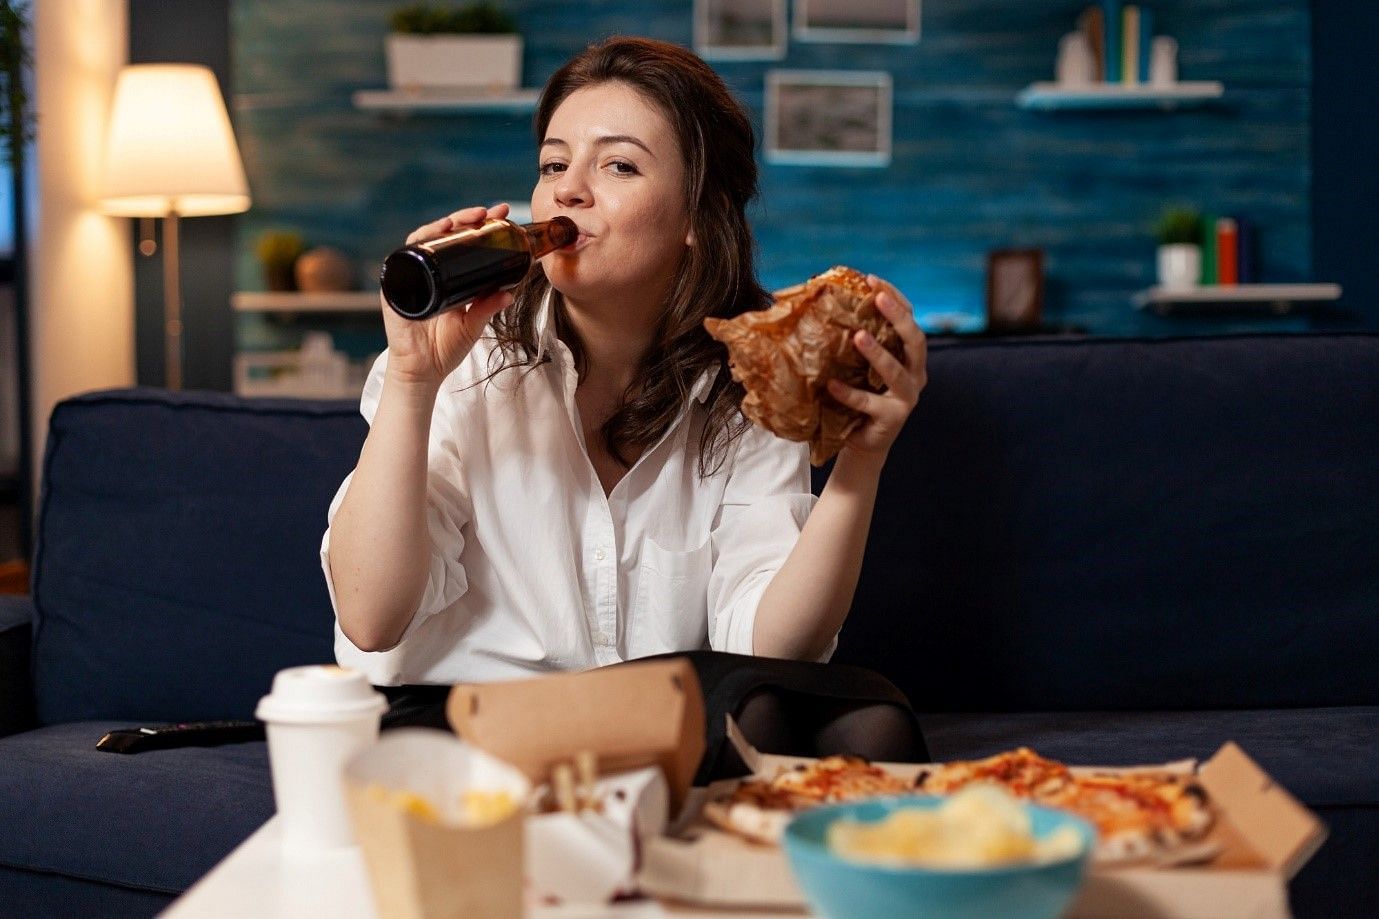 Is consuming junk food healthy? (Image by DCstudio on freepik)